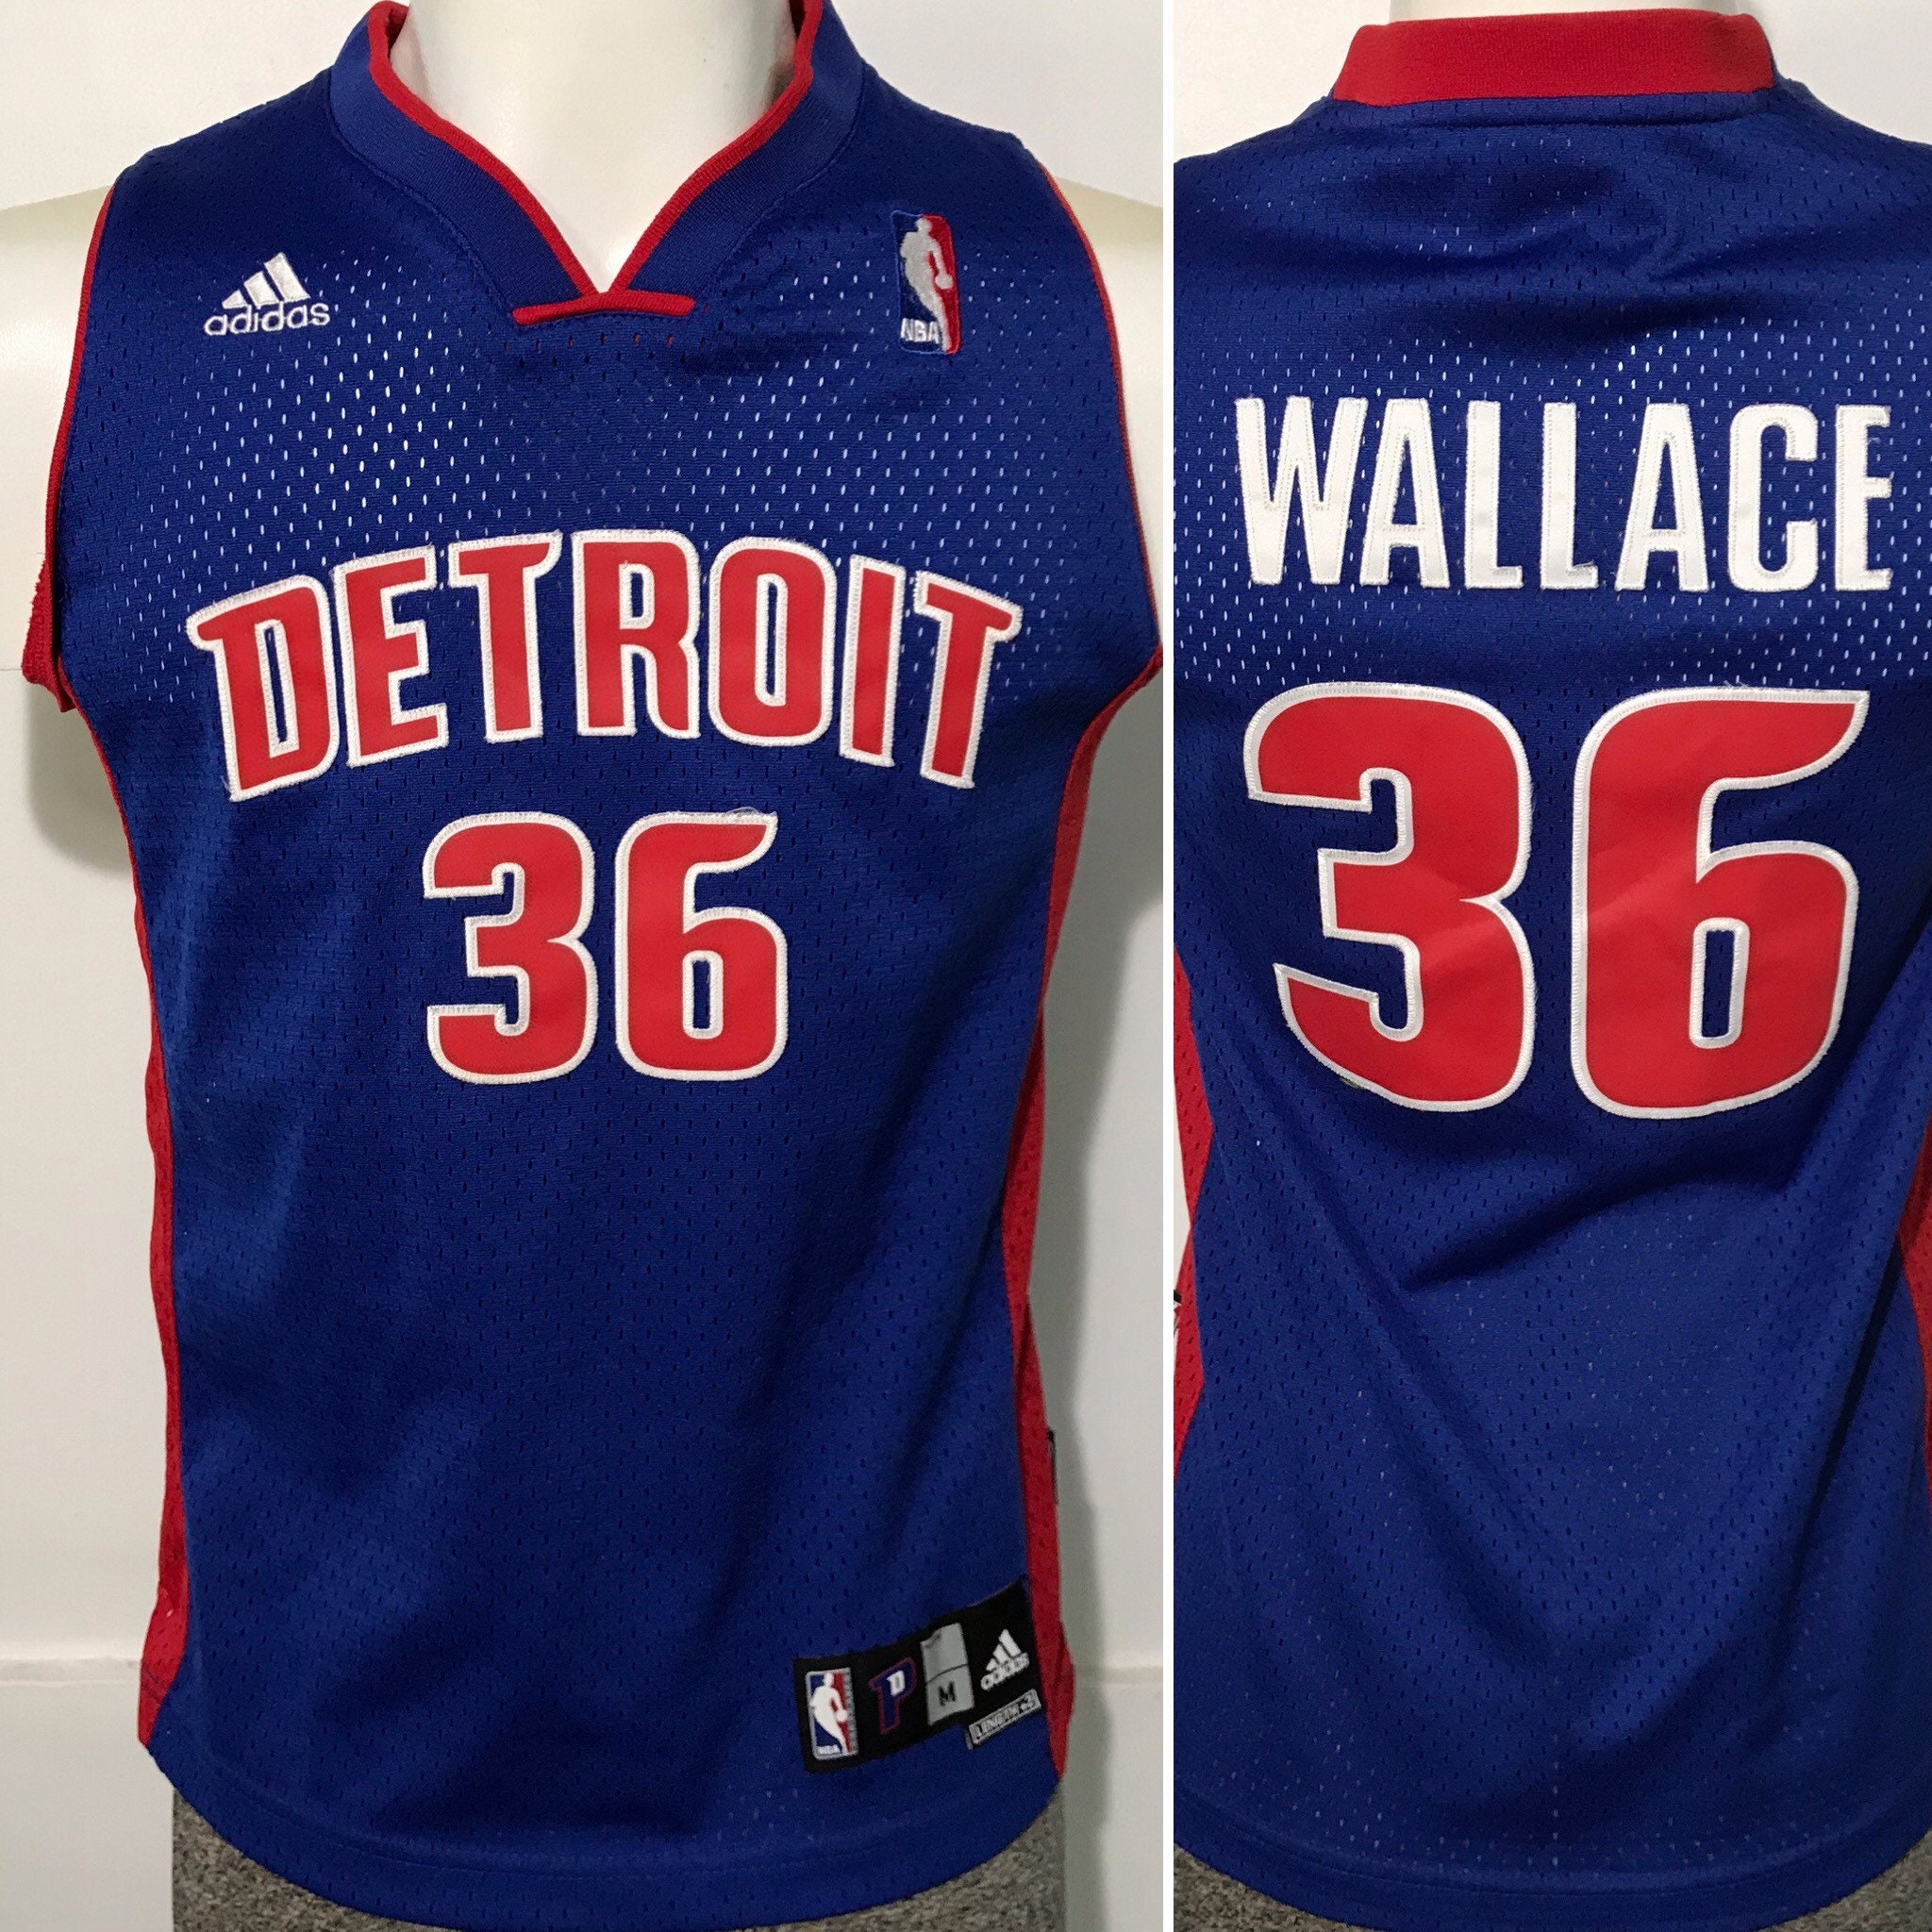 Nba Detroit Pistons Jersey 36 Wallace